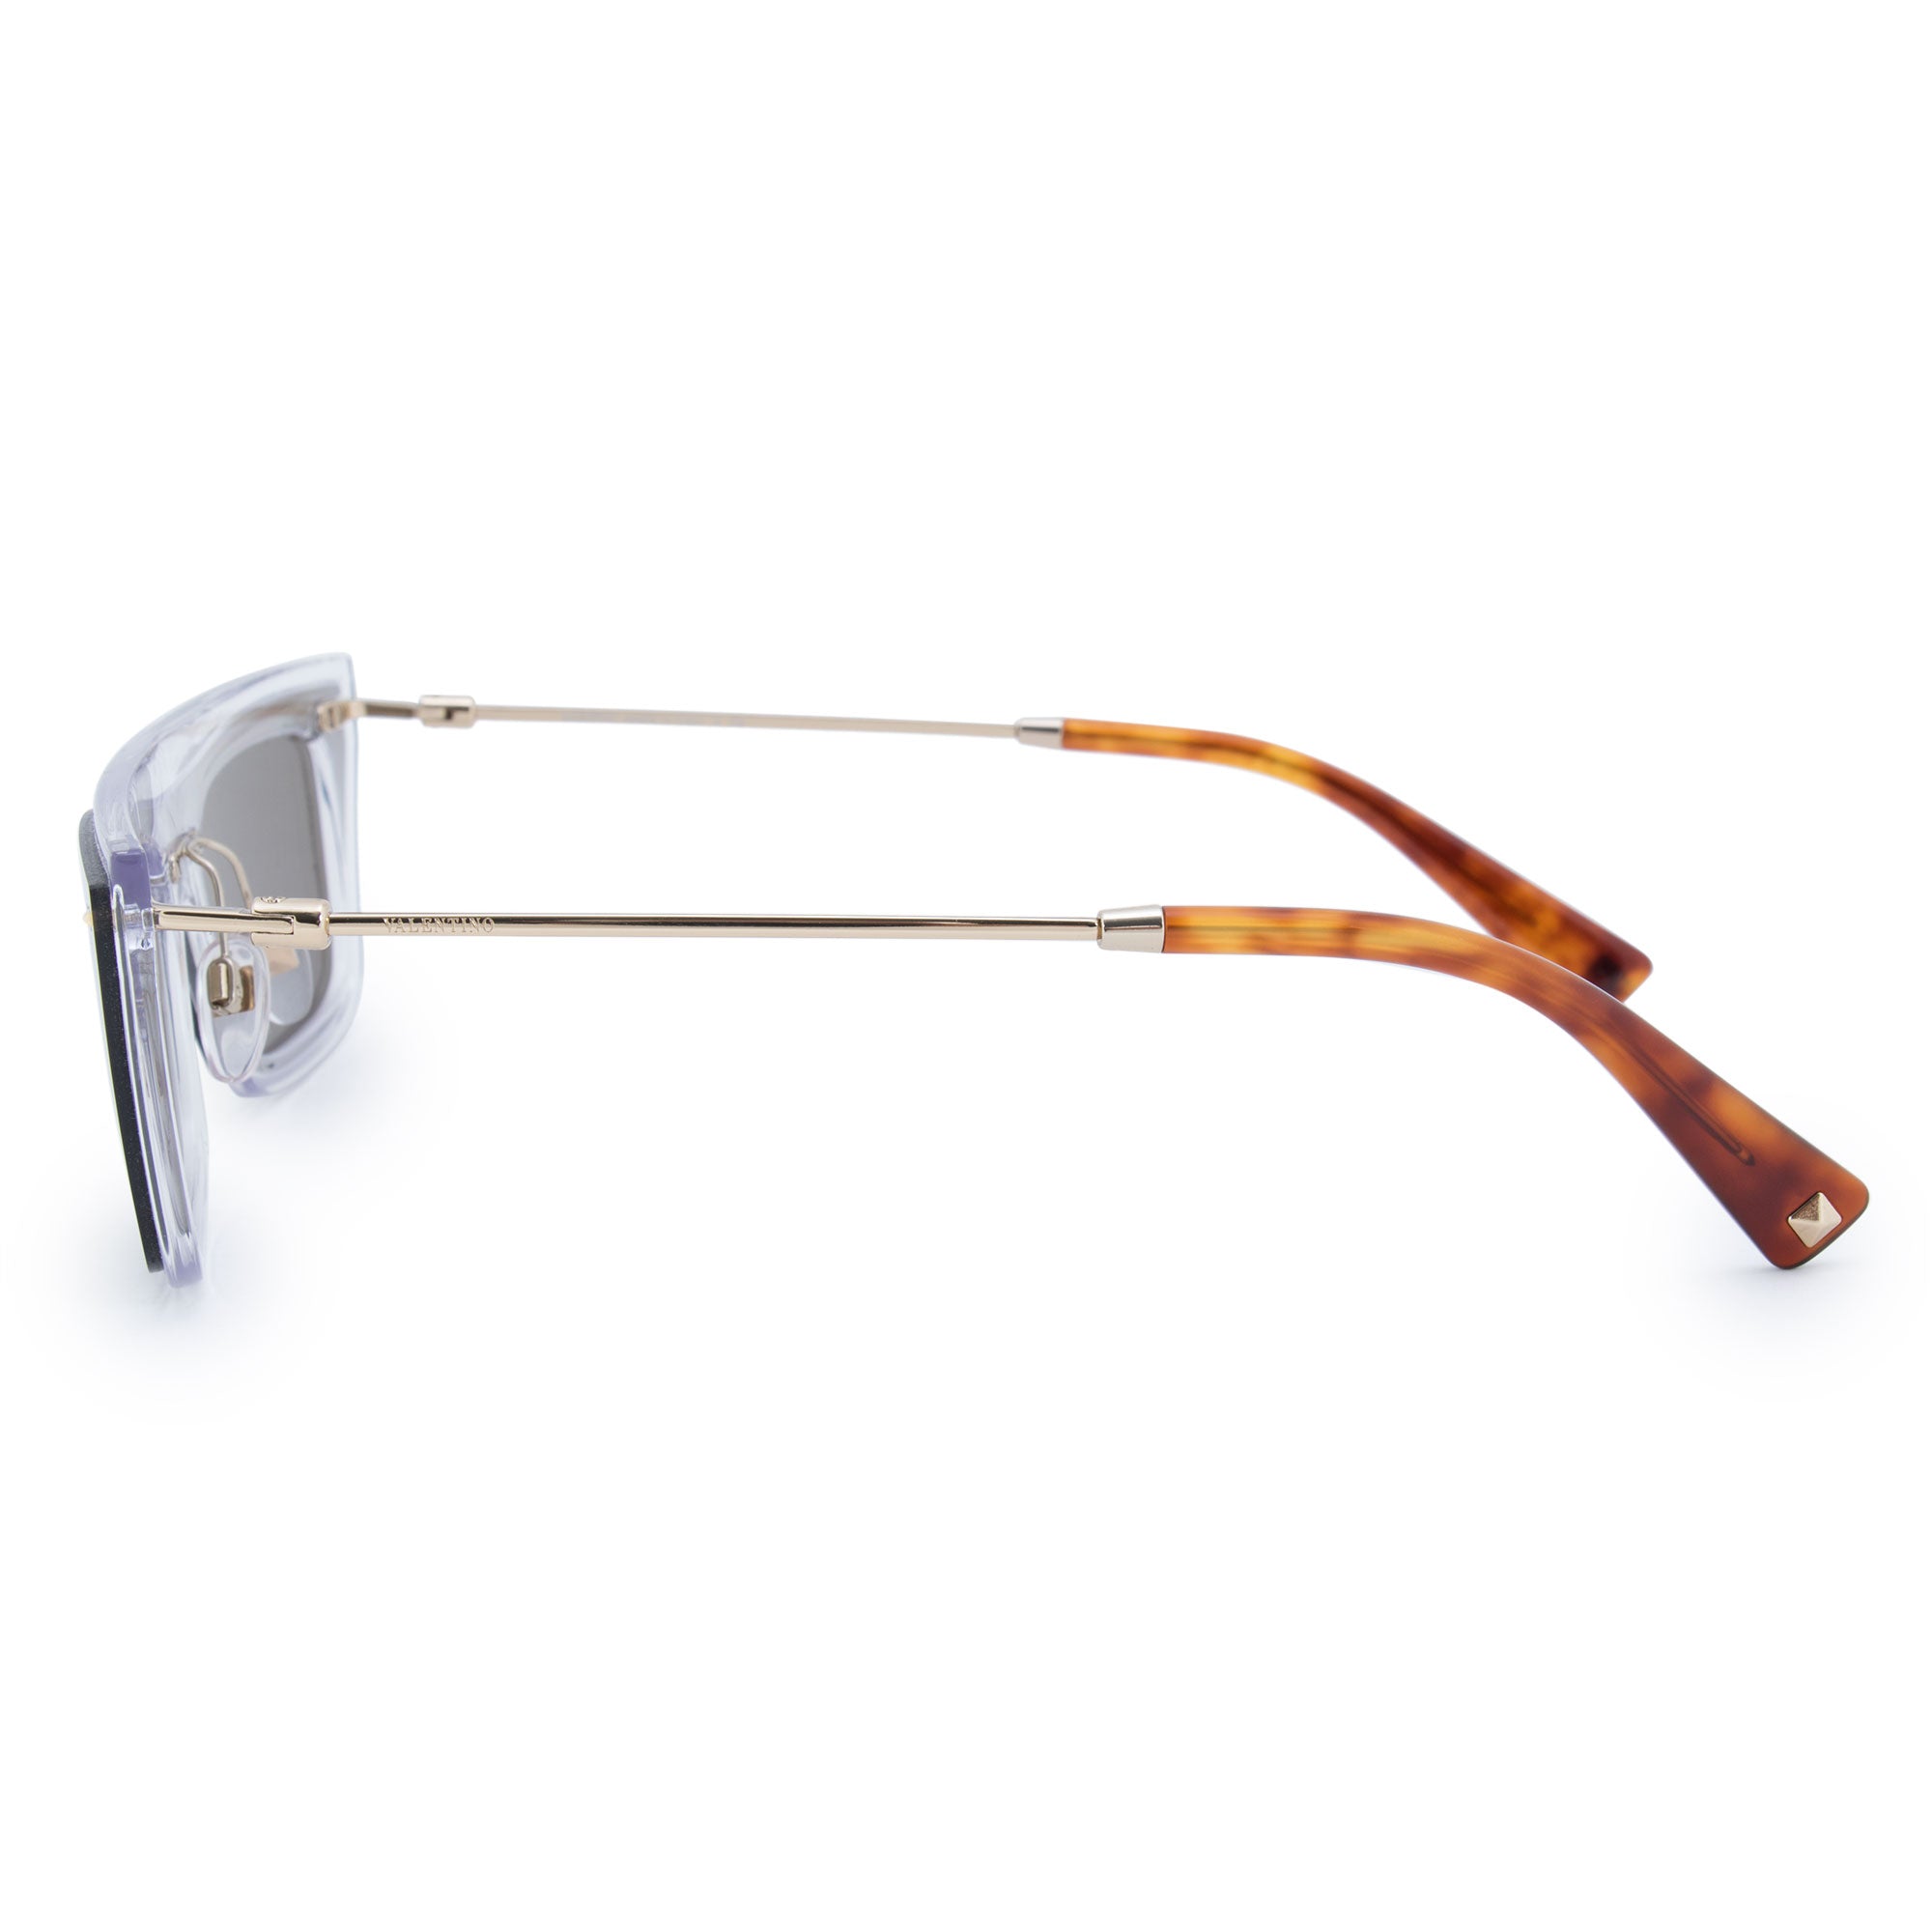 Valentino Single Lens Sunglasses VA4016 50245A 36